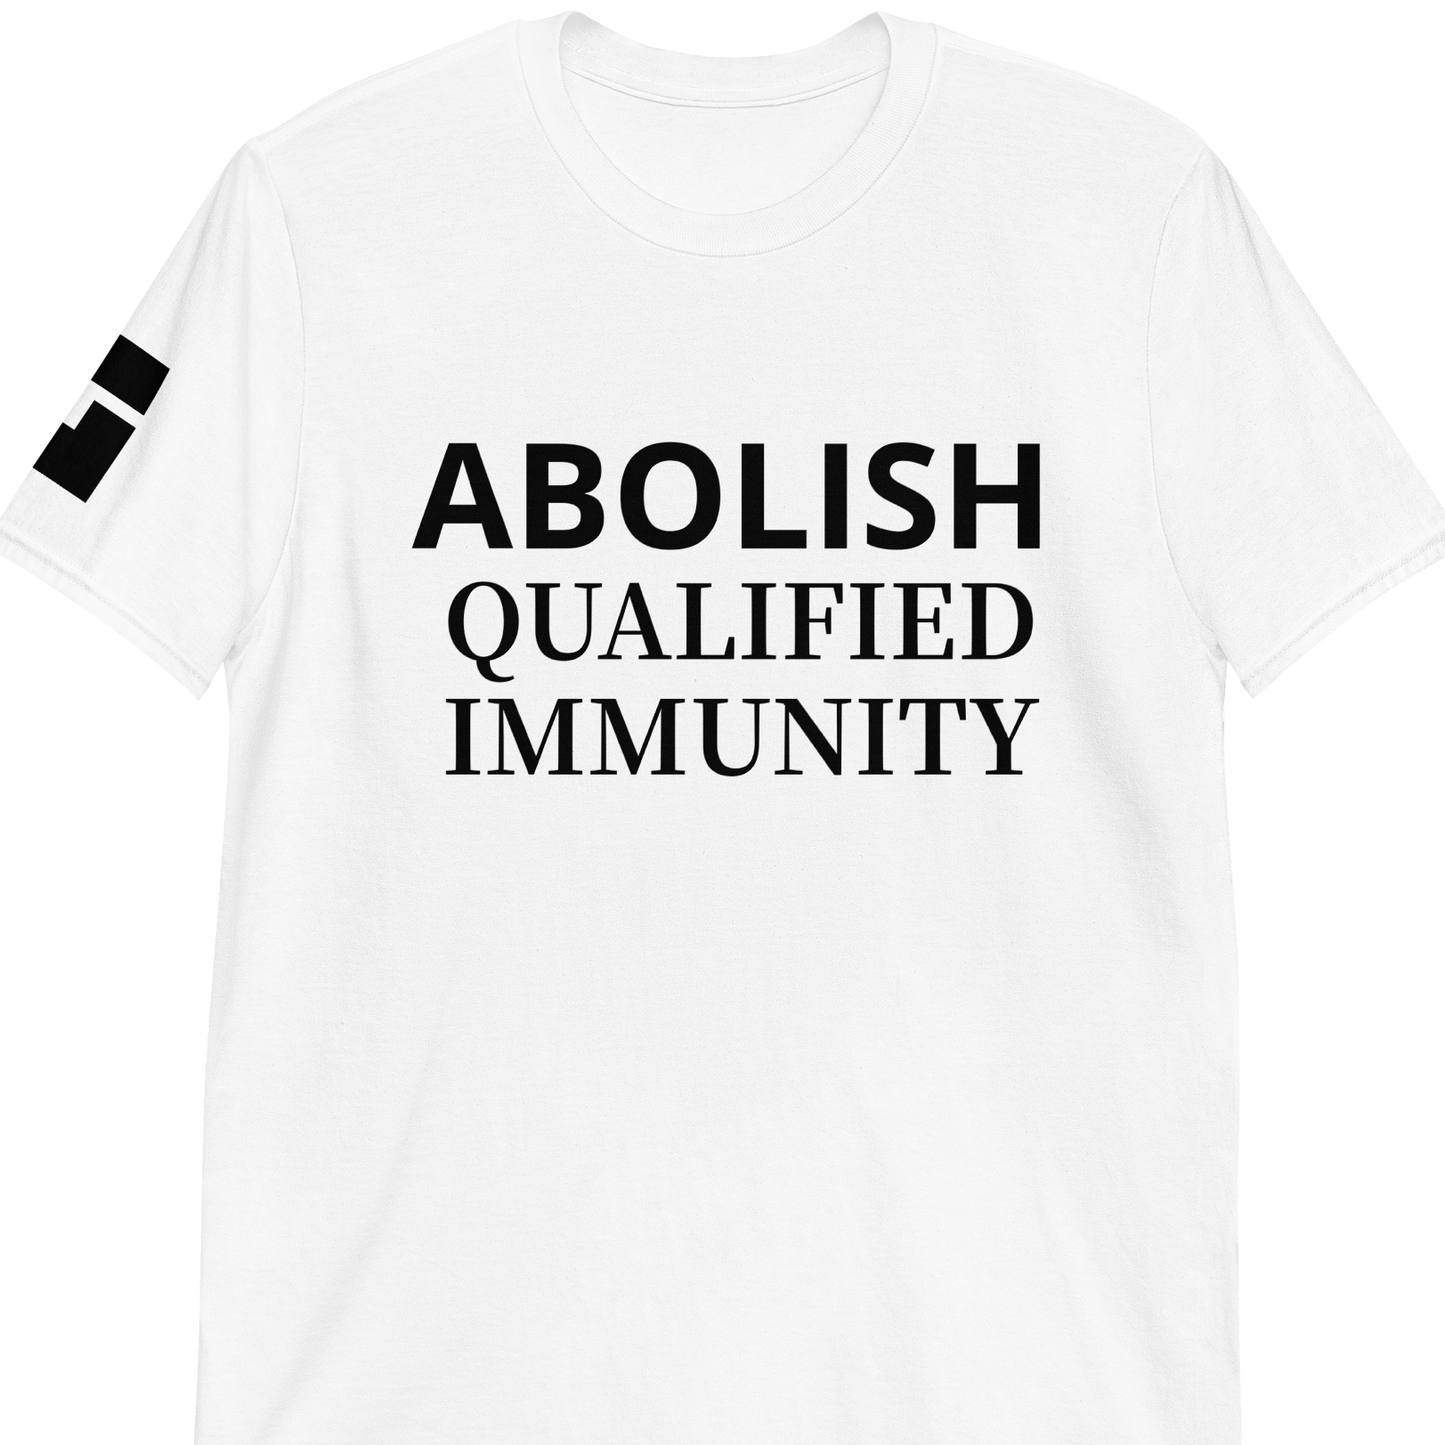 Abolish Qualified Immunity (front) - LackLuster Logo (right sleeve)